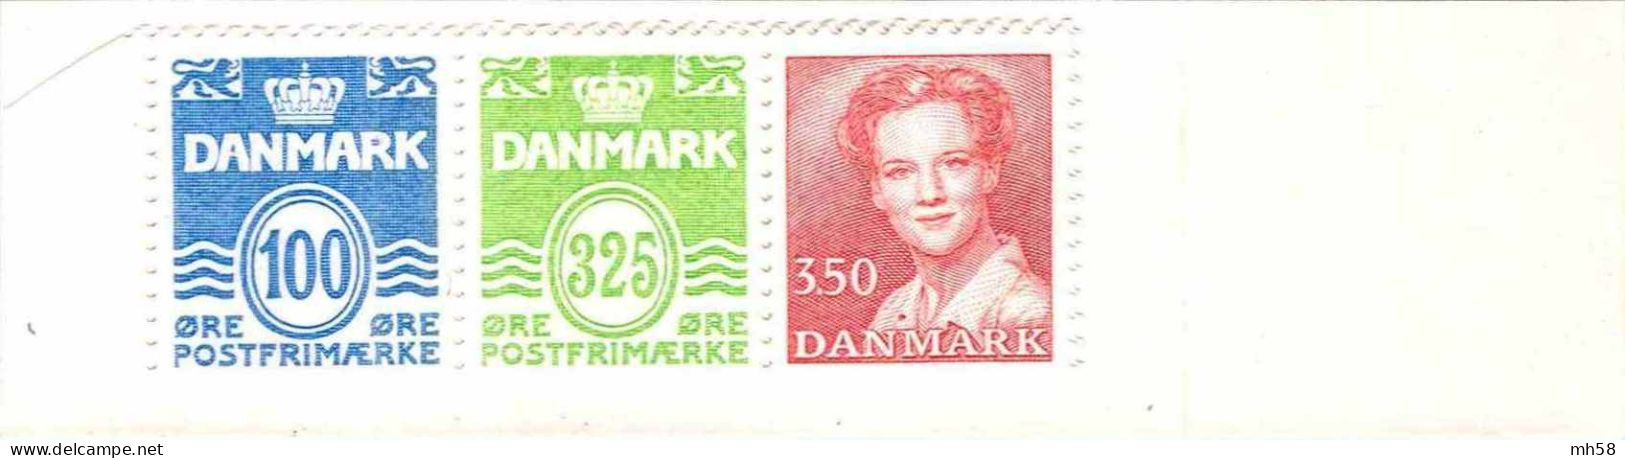 DANEMARK 1990 - Carnet / Booklet / MH Indice C10 - 10 Kr Chiffres / Reine Margarethe - YT C 966 I / MI MH 41 - Markenheftchen